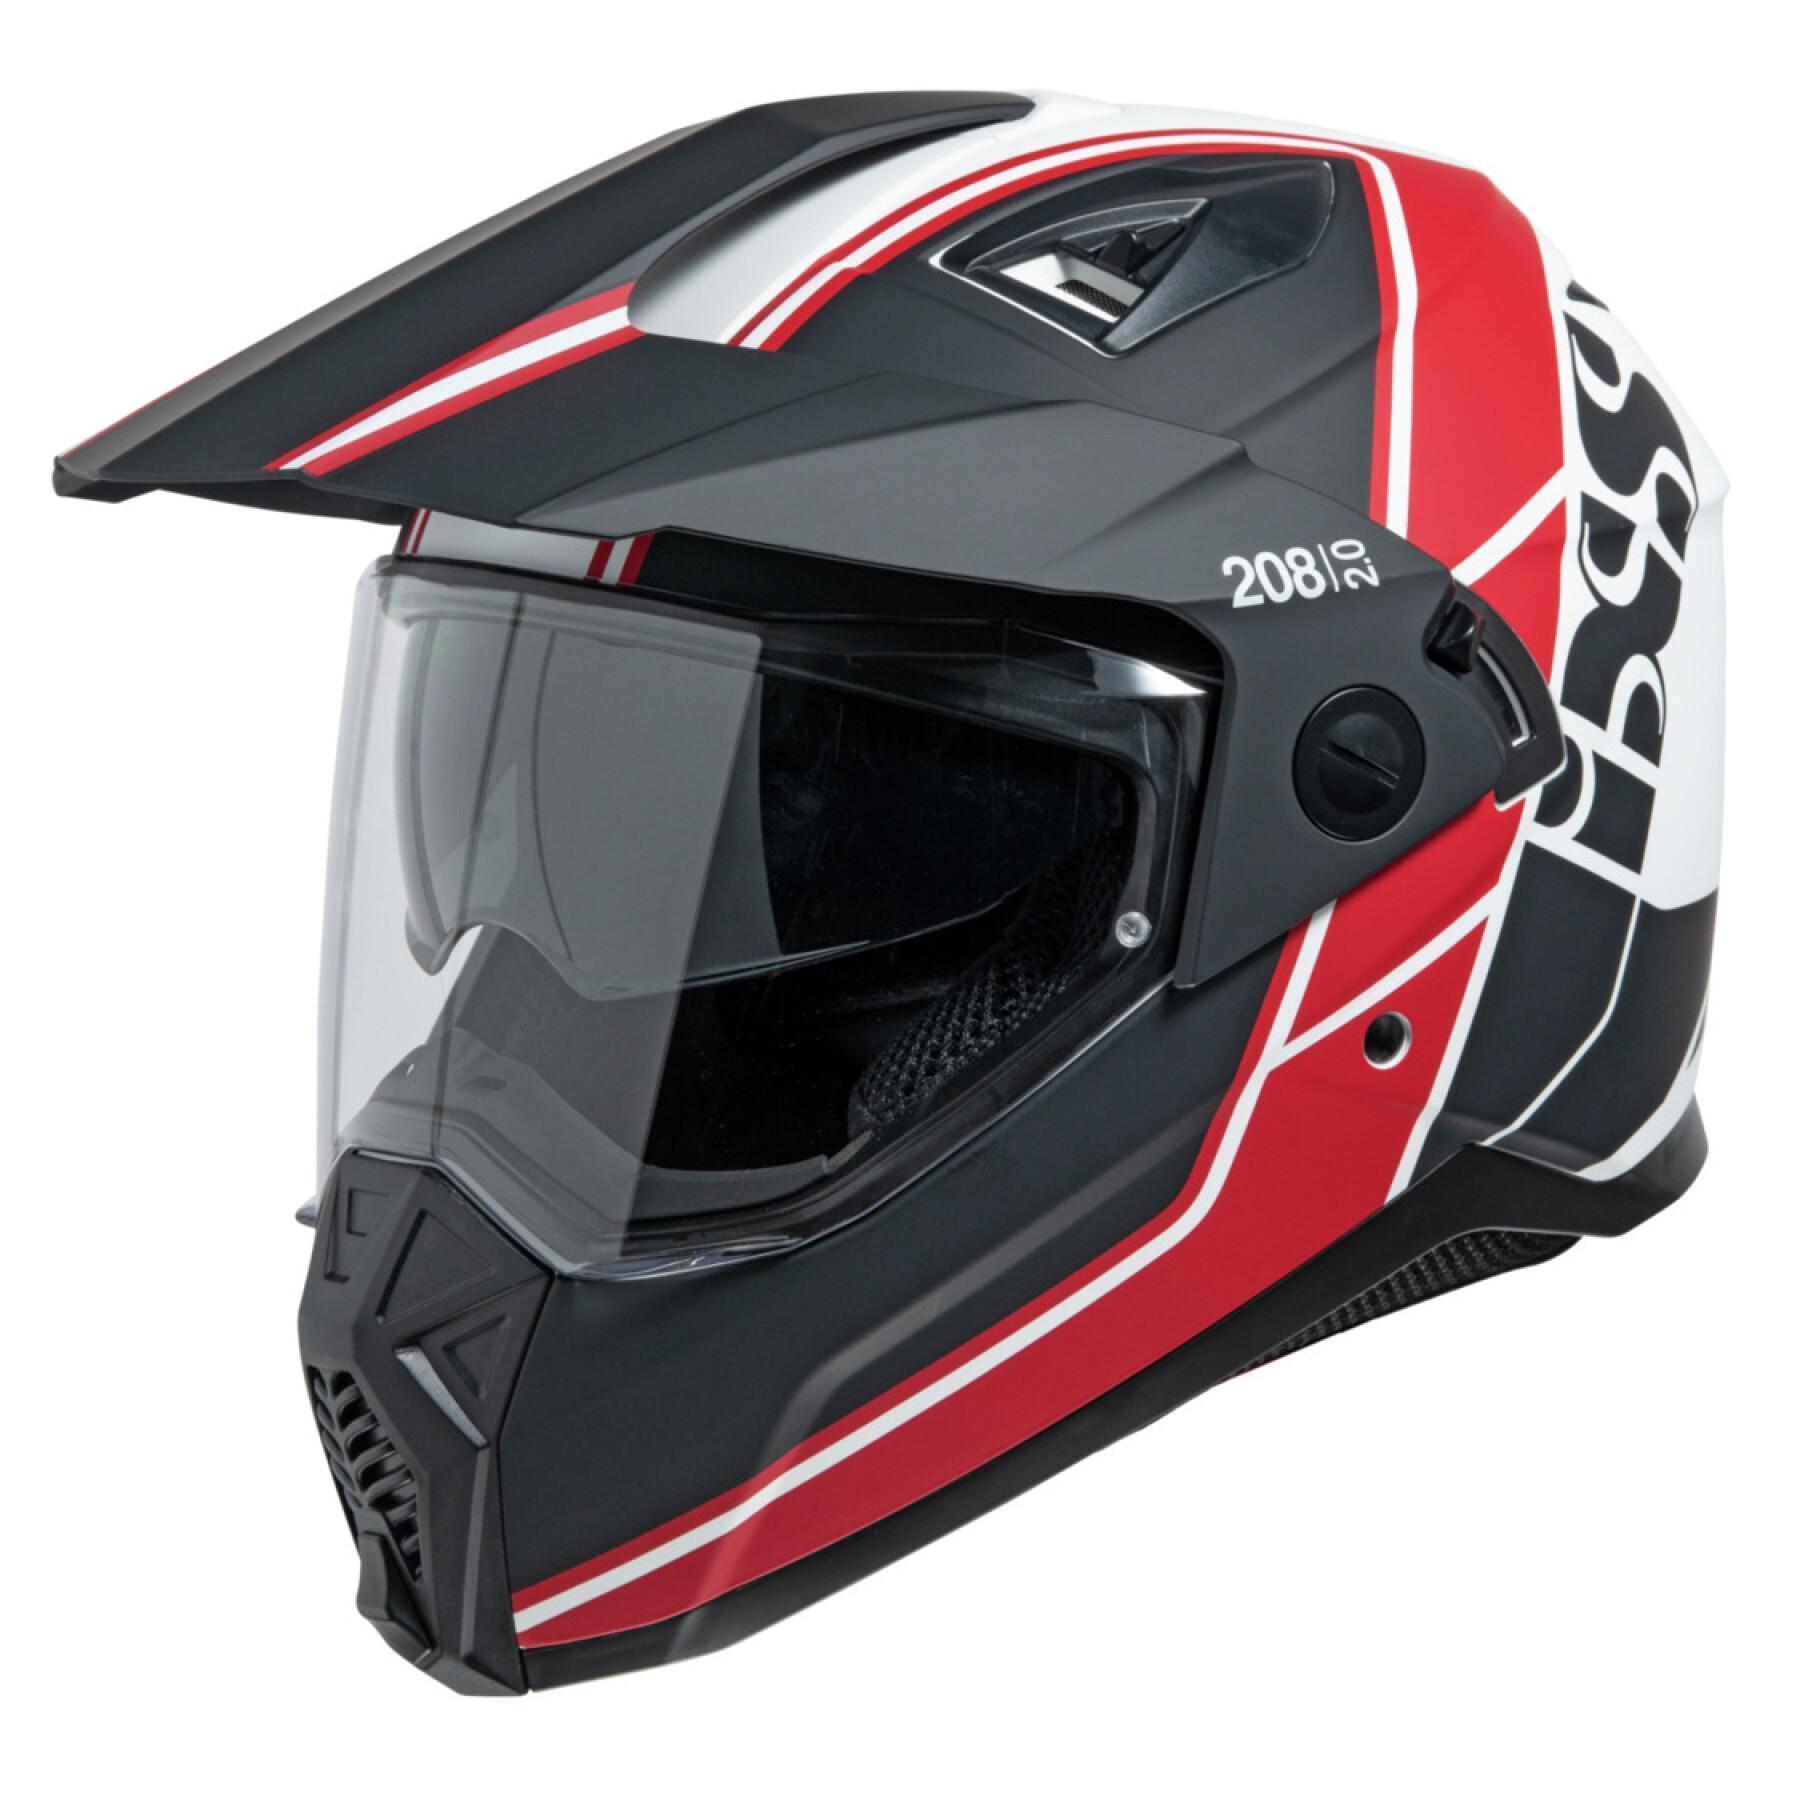 Modular motorcycle helmet IXS enduro 208 2.0